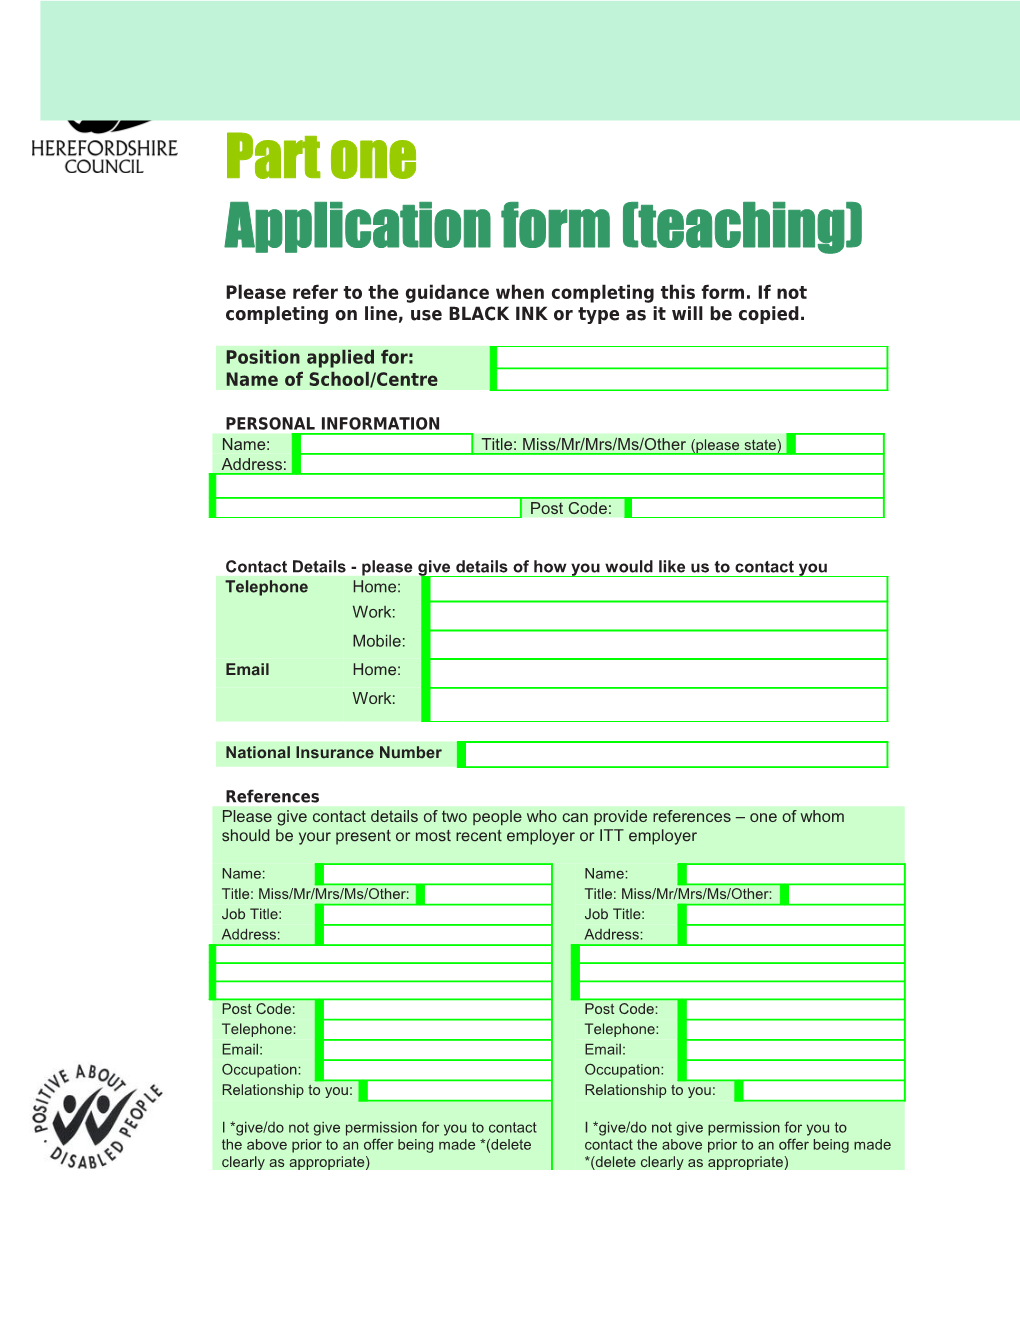 Application Form (Teaching) s1